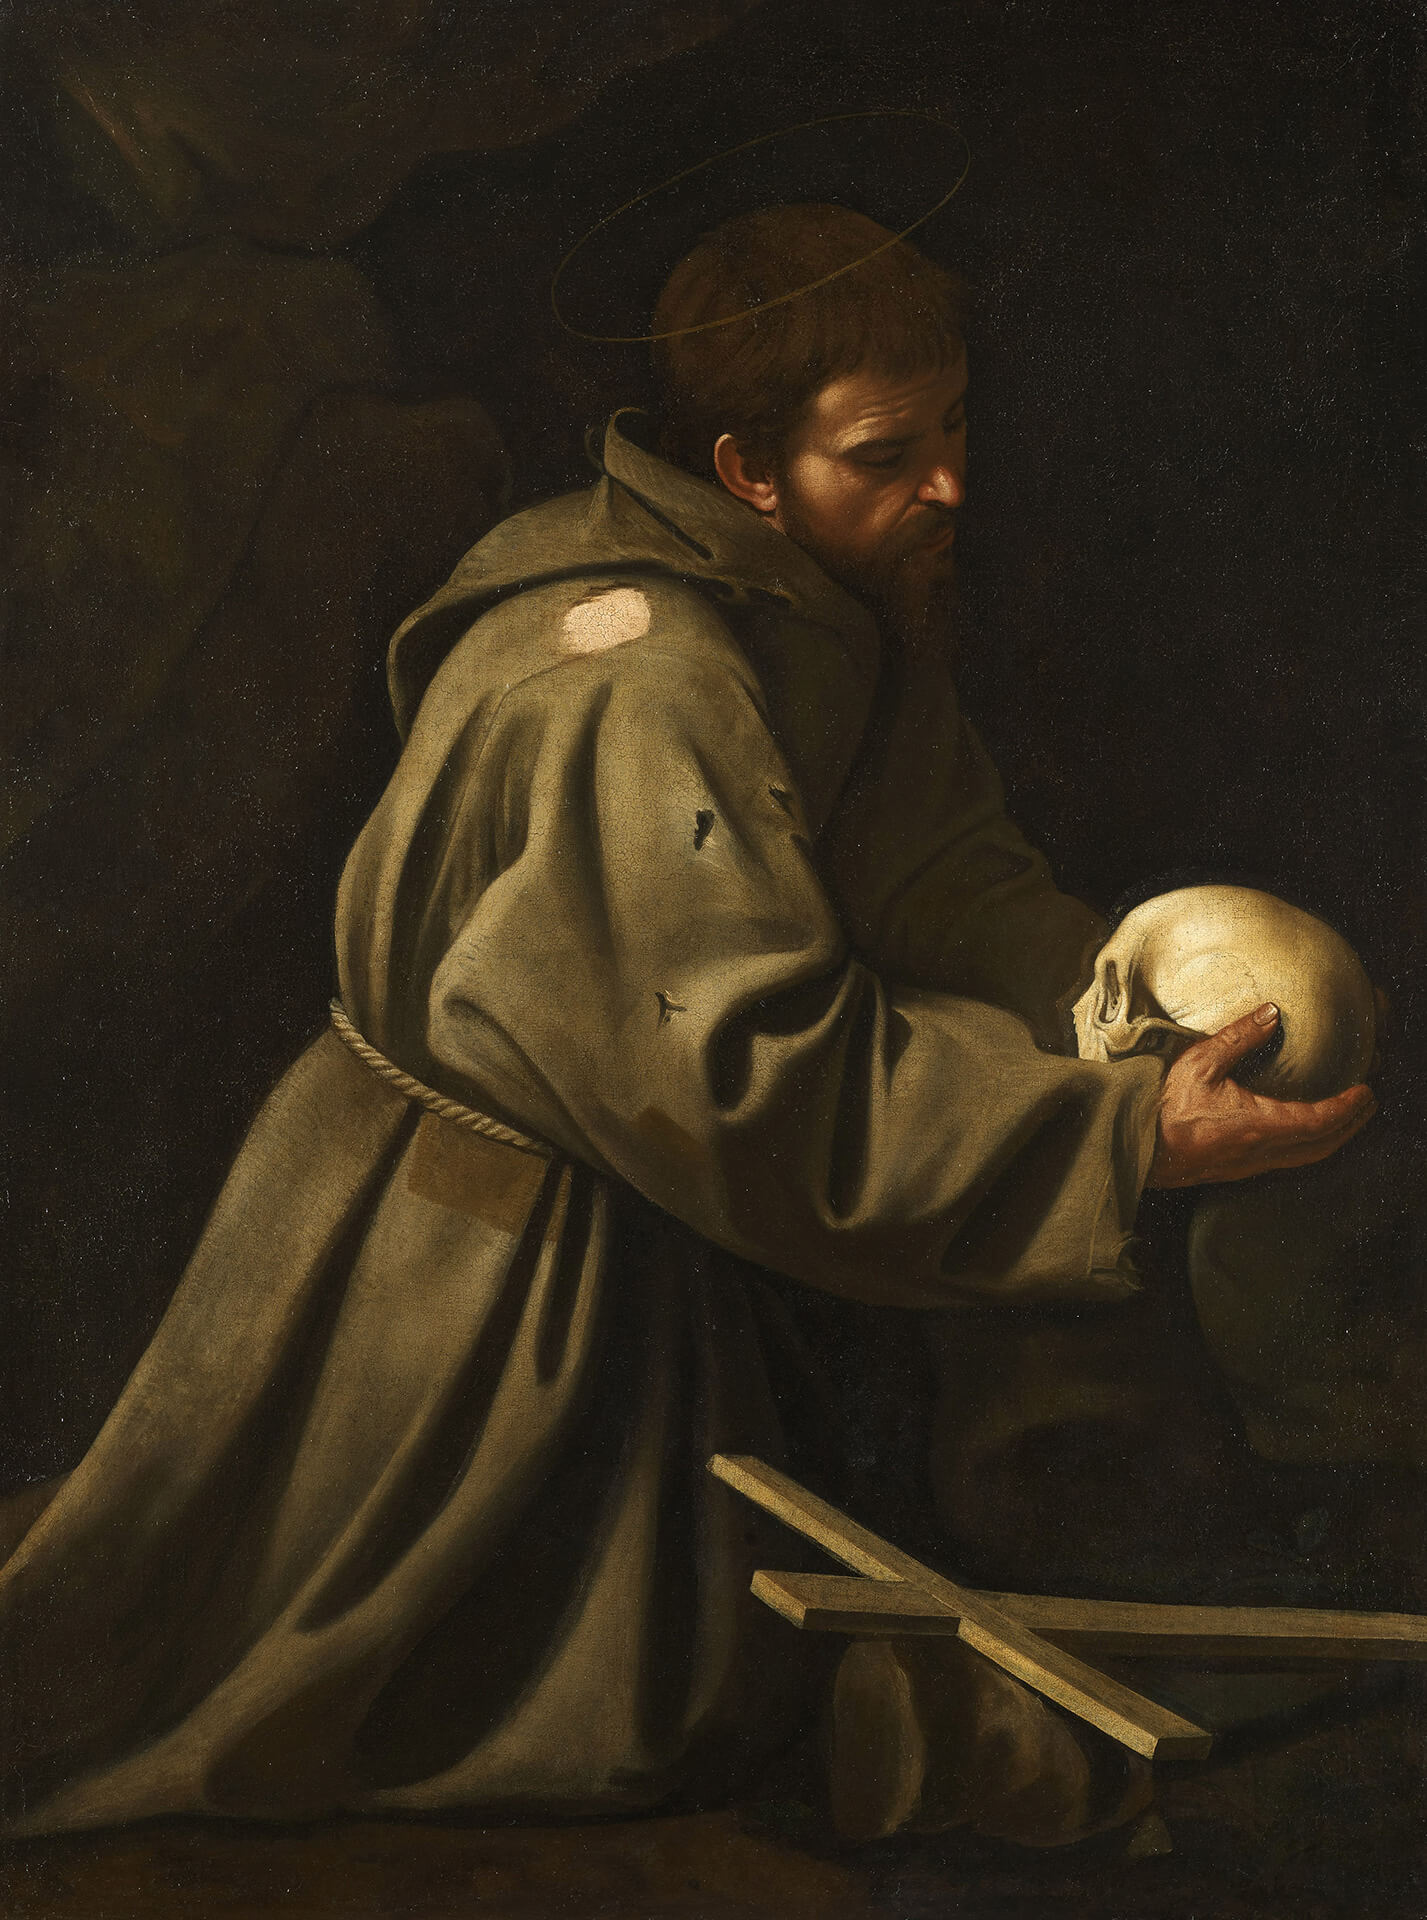 Michelangelo Merisi, also called Caravaggio